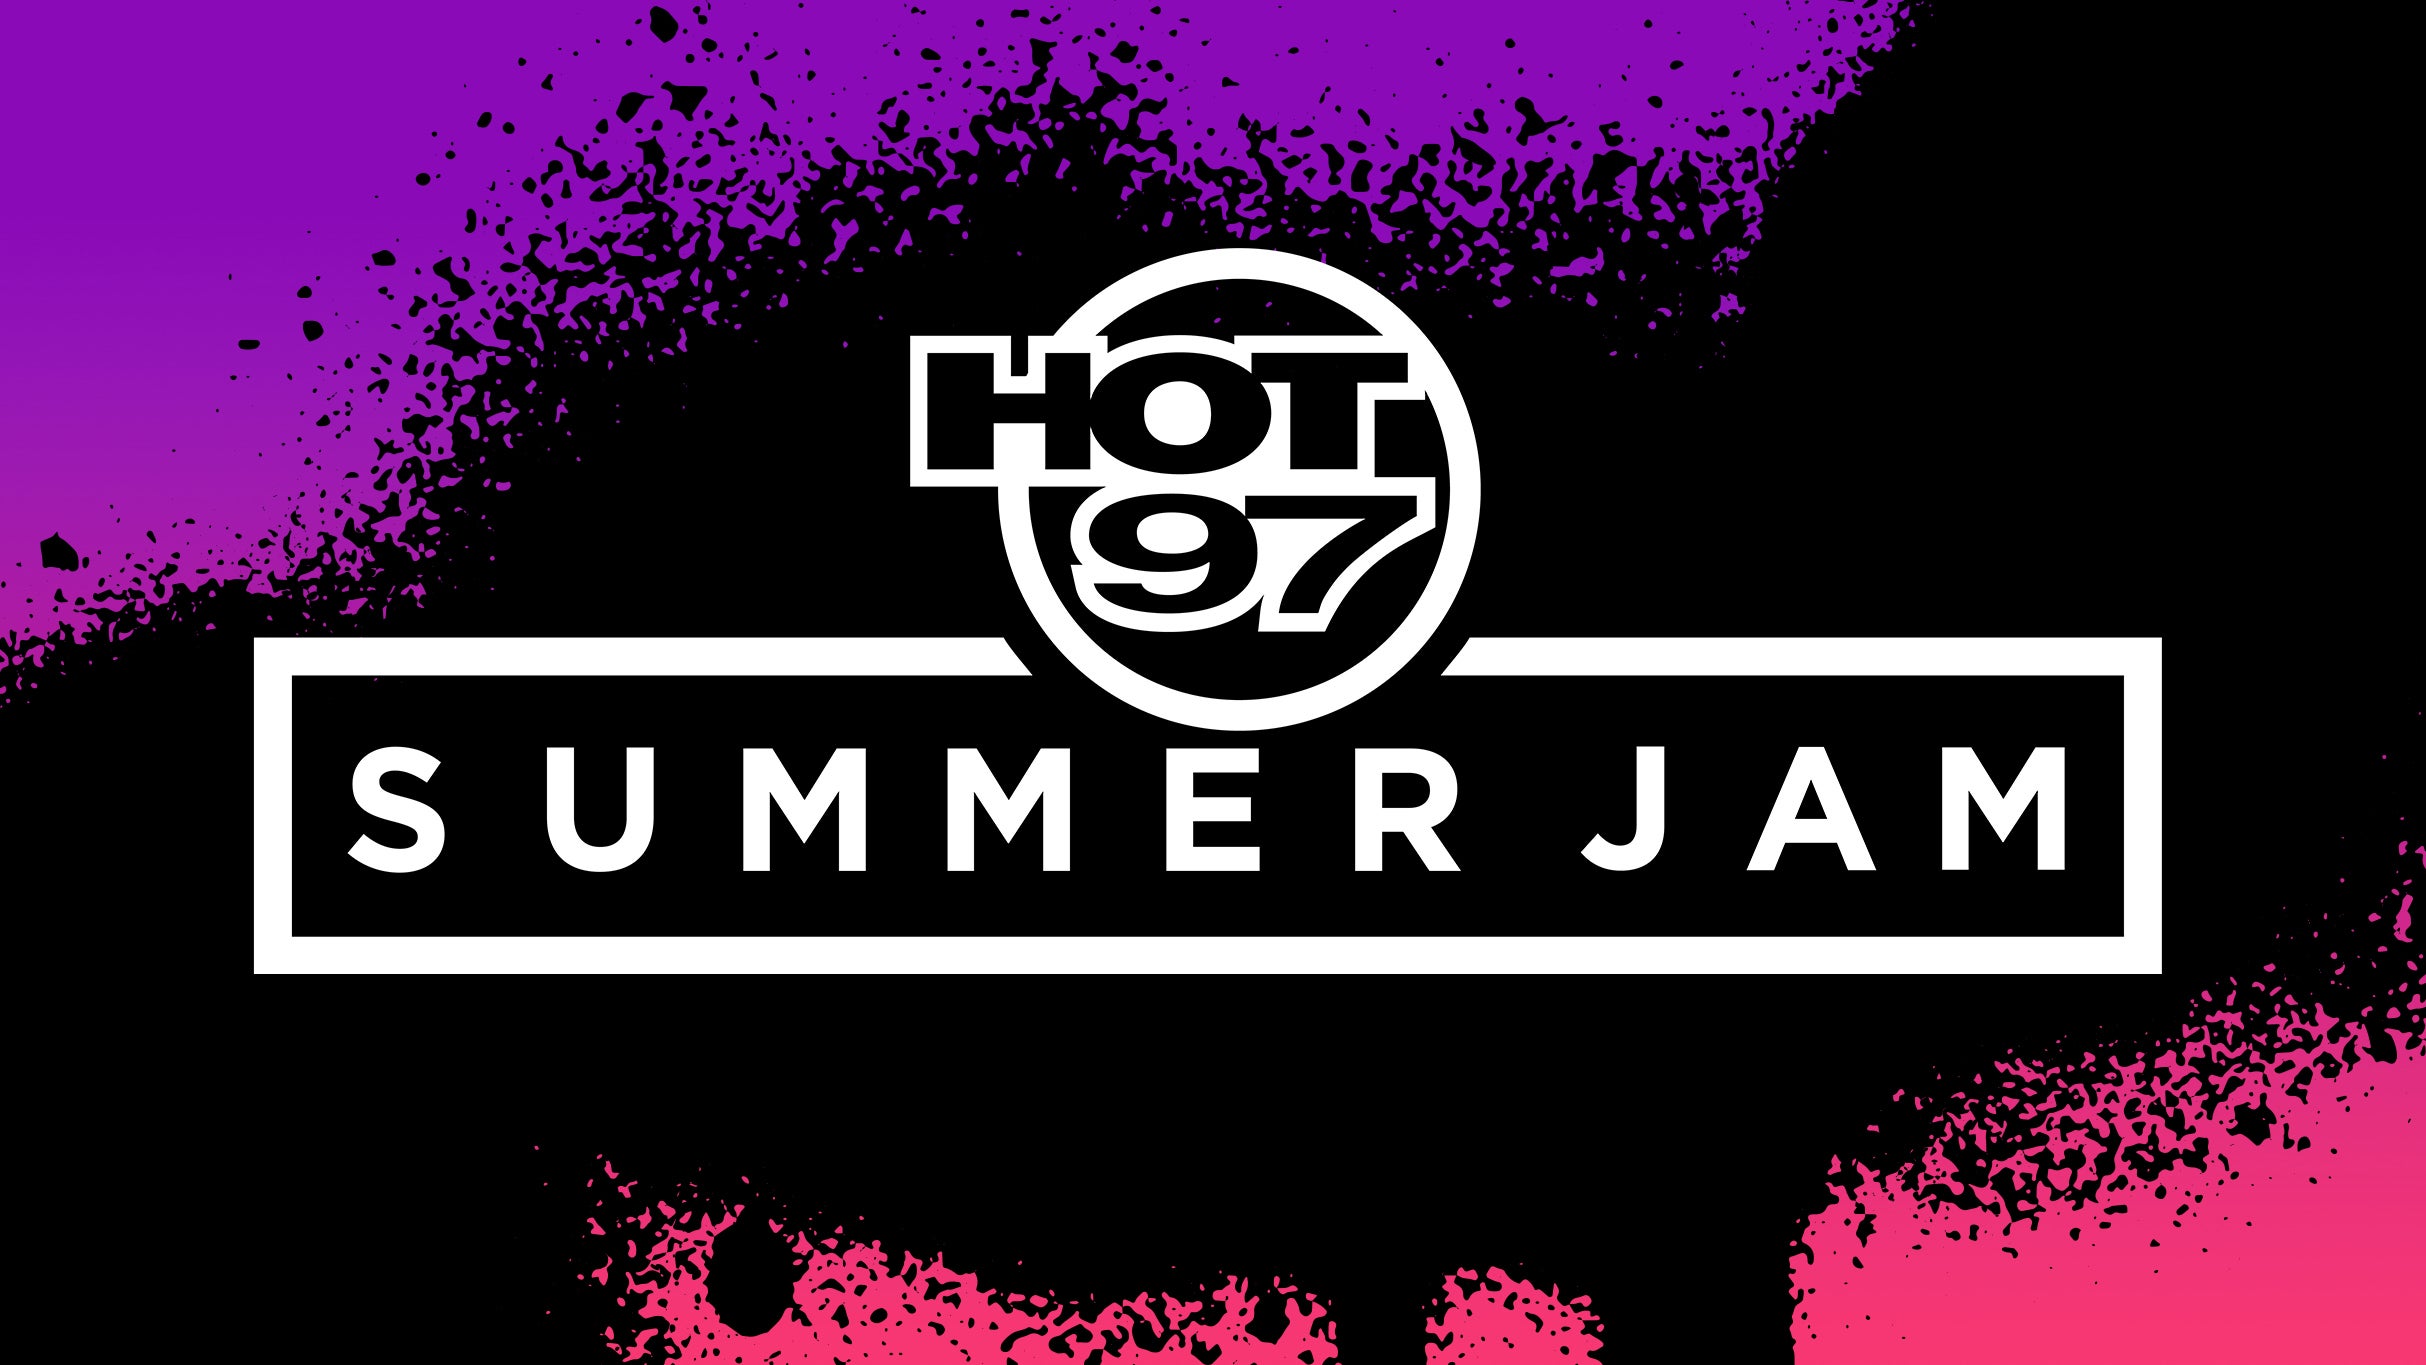 HOT 97 Summer Jam in Belmont Park promo photo for Official Platinum presale offer code